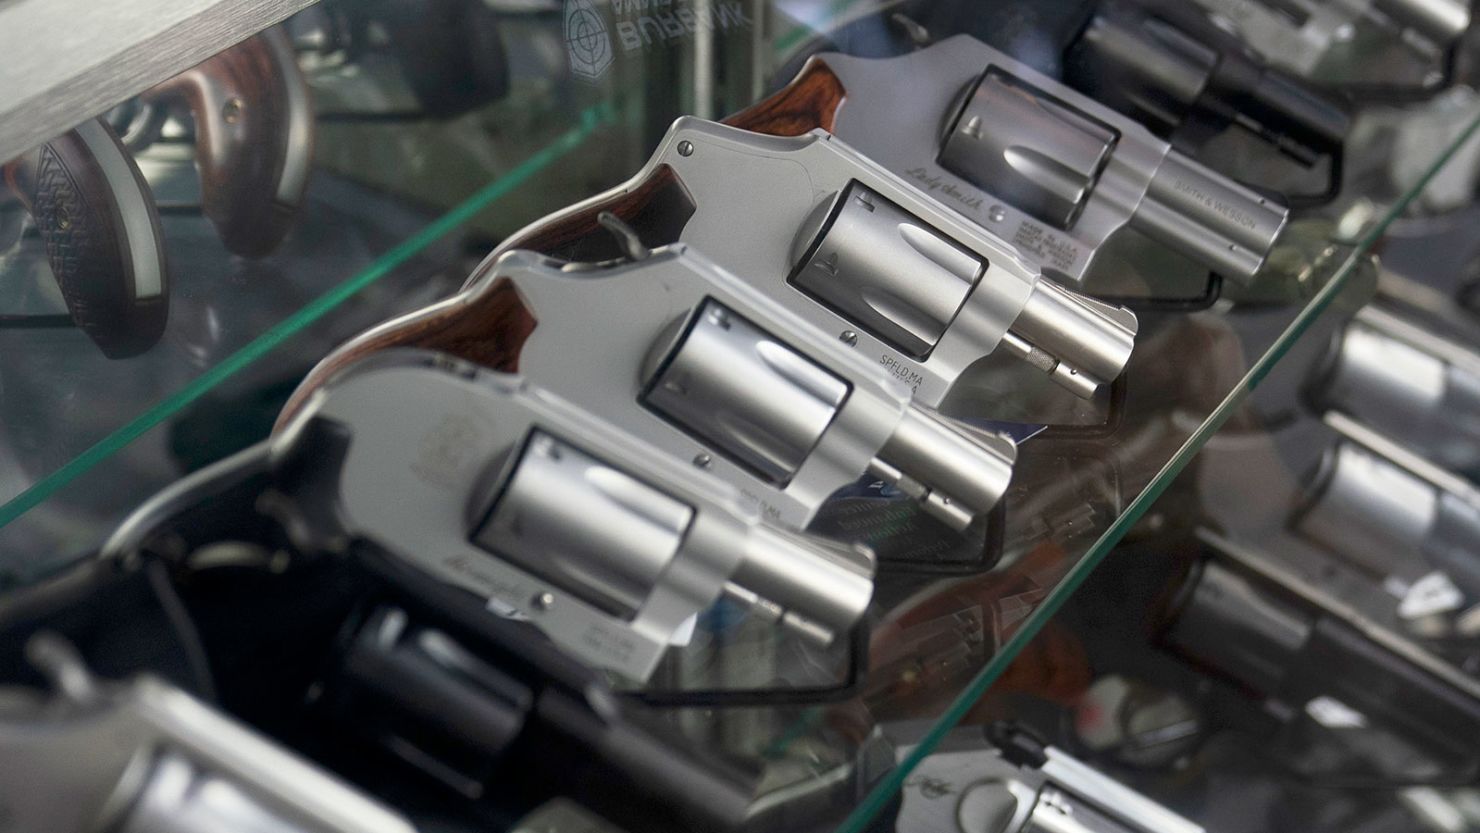 A sales associate arranges a display of guns at a firearms store in Burbank, California.